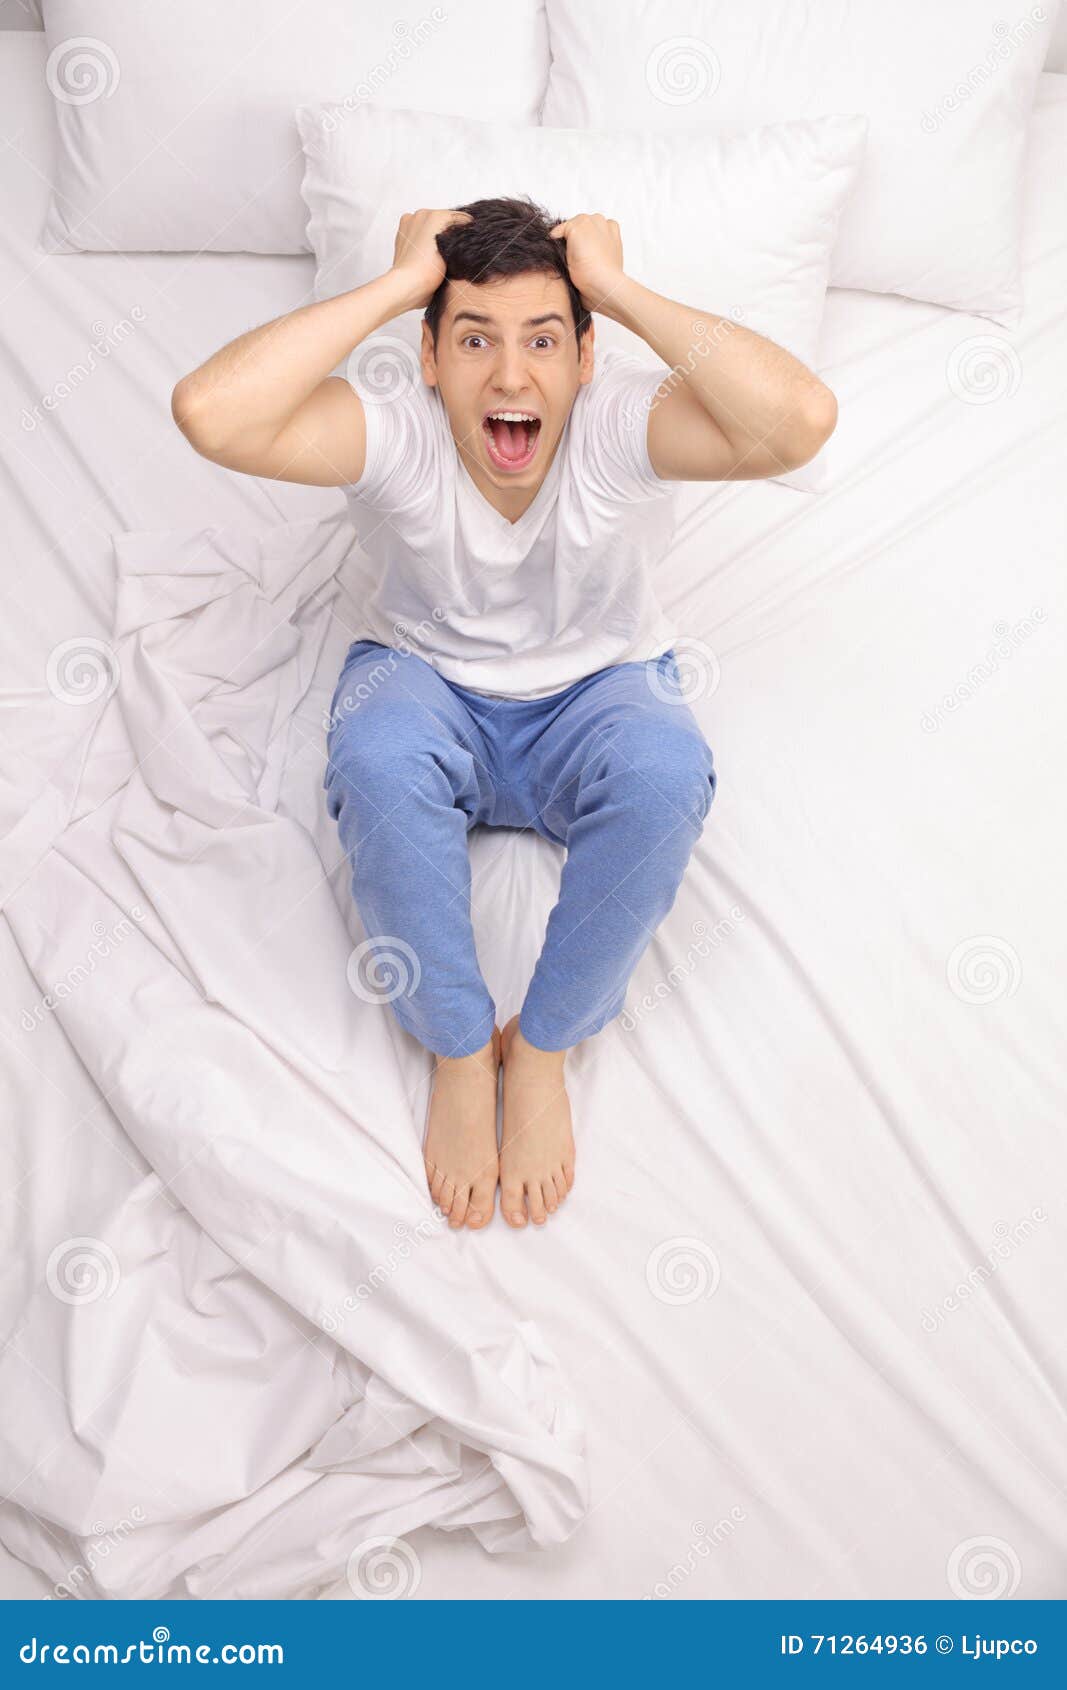 Кричат в постели. Беспокойный человек. Беспокойный человек картинки. Фото беспокойного человека. Angry Bed.